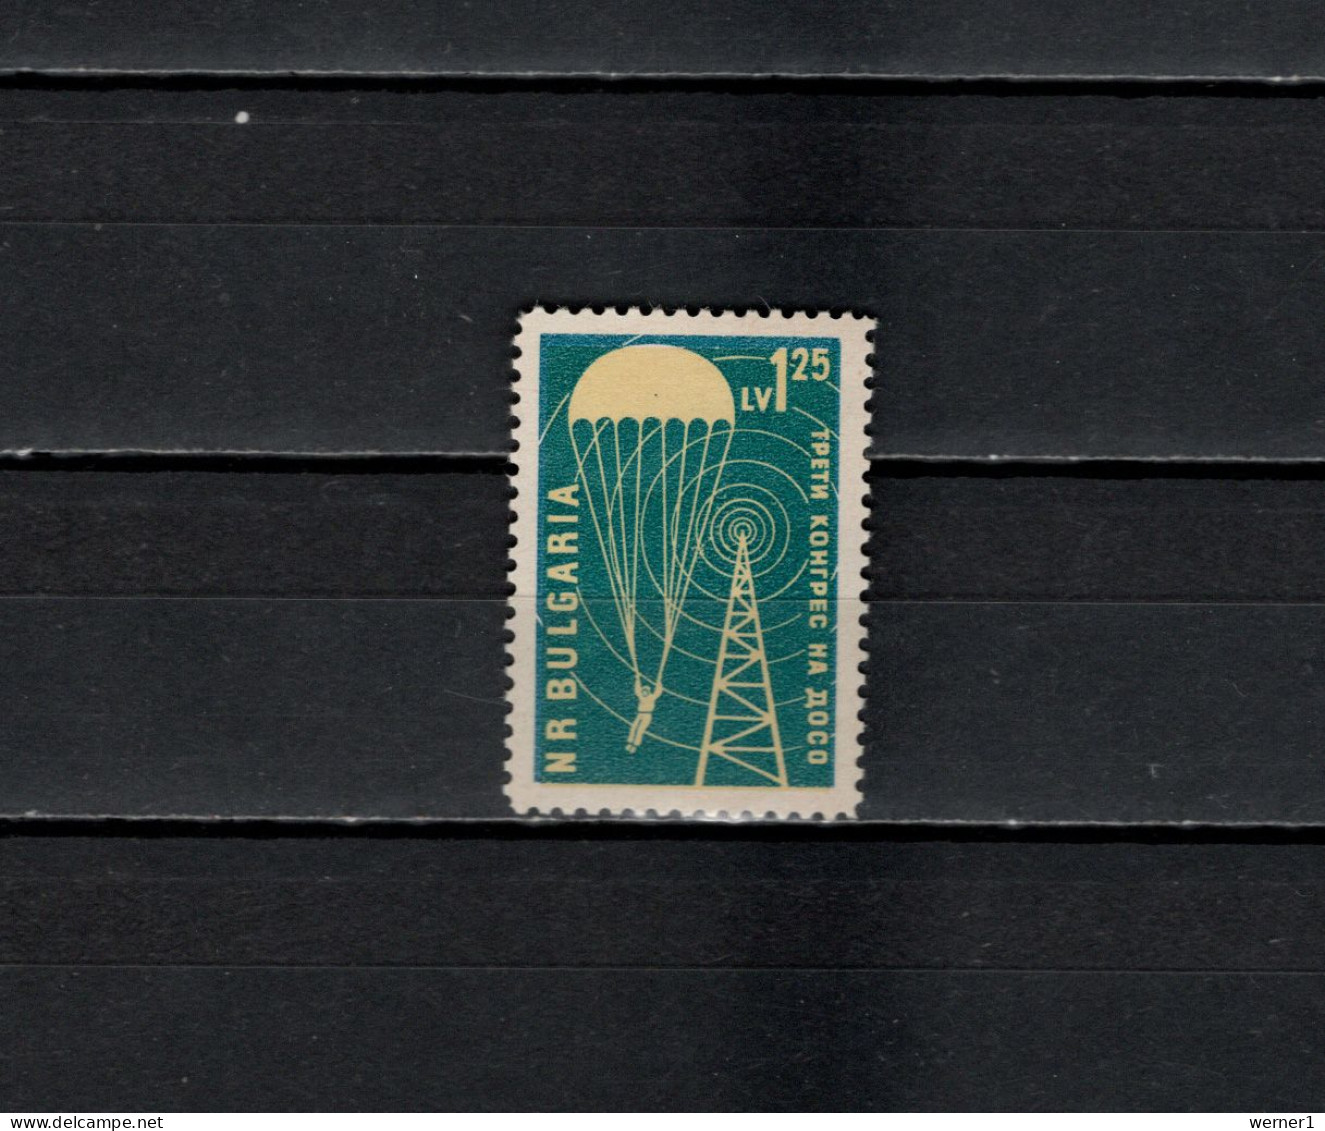 Bulgaria 1959 Space, DOSO 1.25L Stamp MNH - Europe